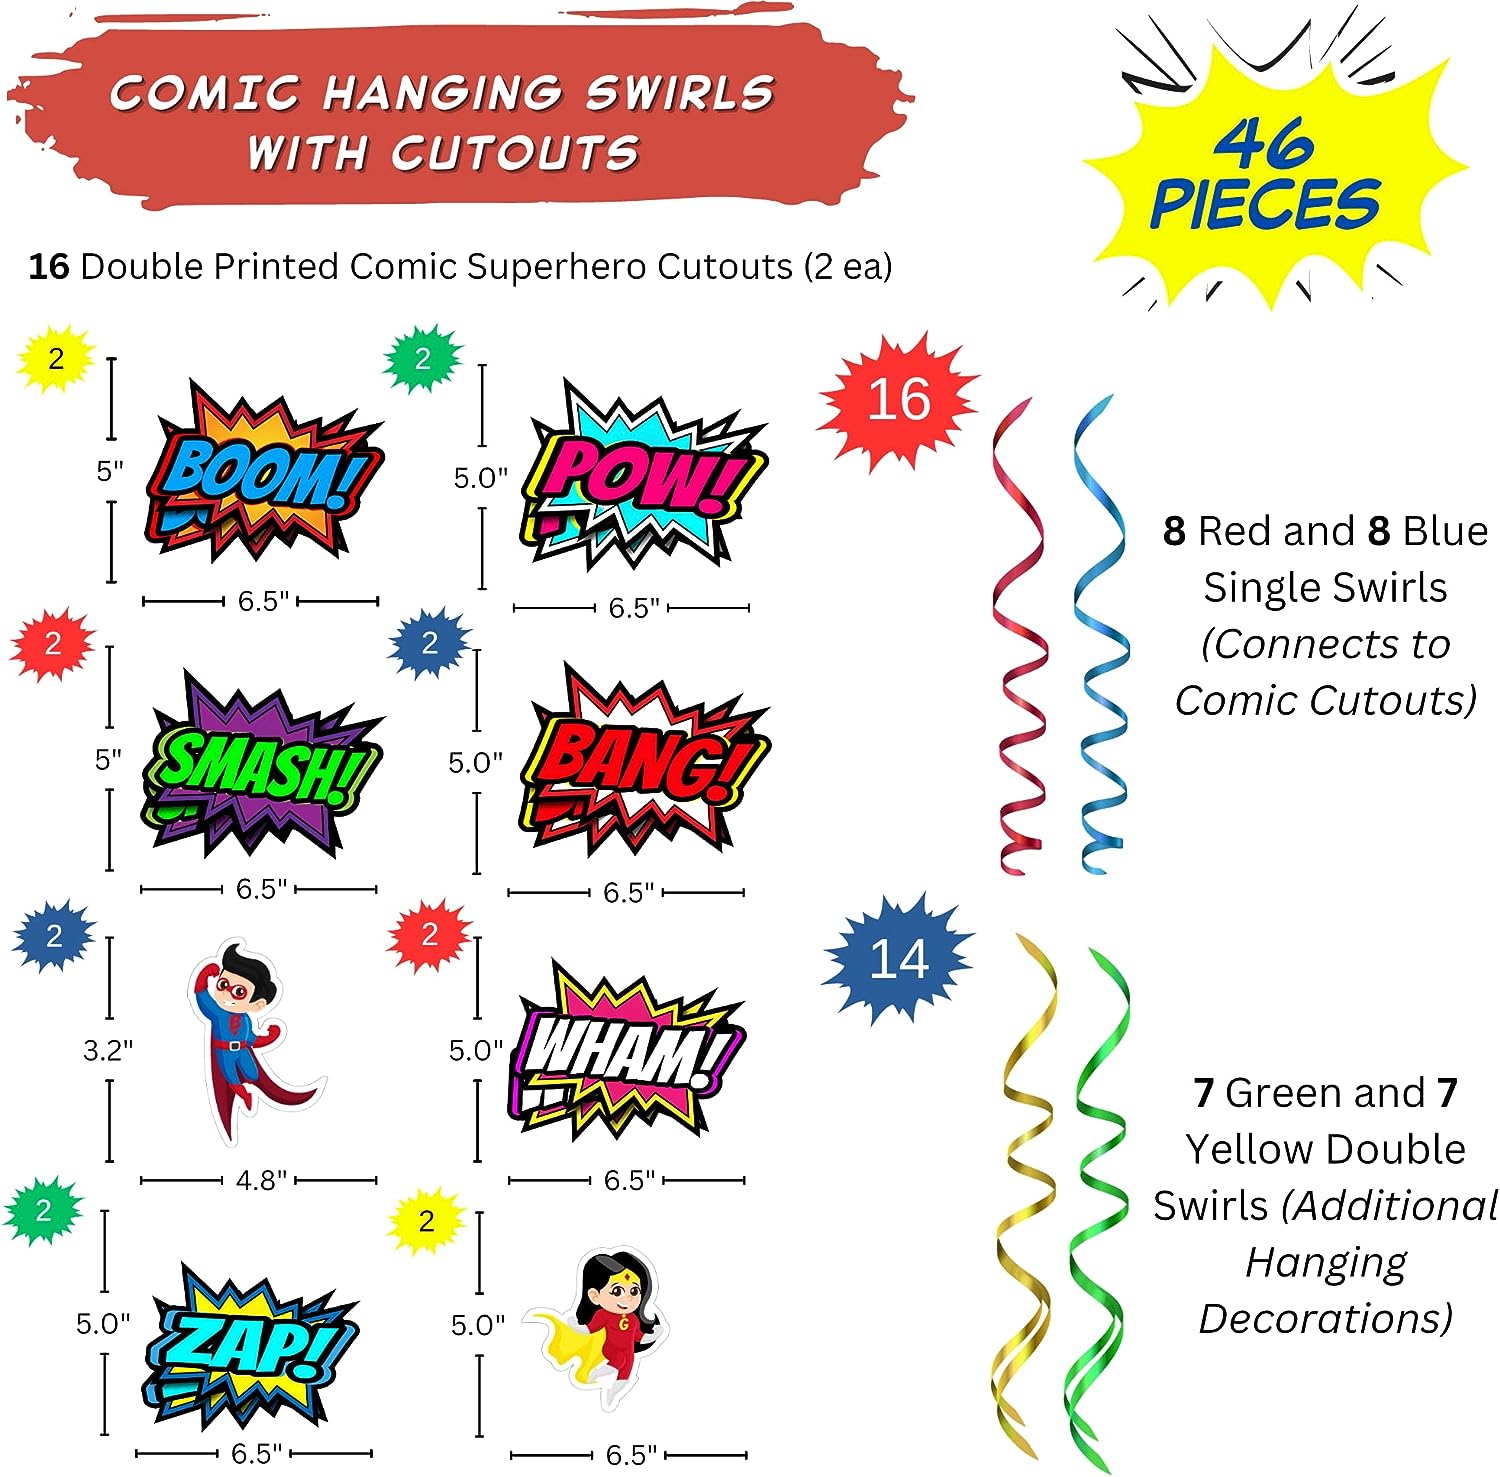 SWIRLS AND CUTOUTS - Contains (16) Double Printed Comic Superhero Cutouts - (8) Red Single Swirls - (8) Blue Single Swirls - (7) Yellow Double Swirls - (7) Green Double Swirls.